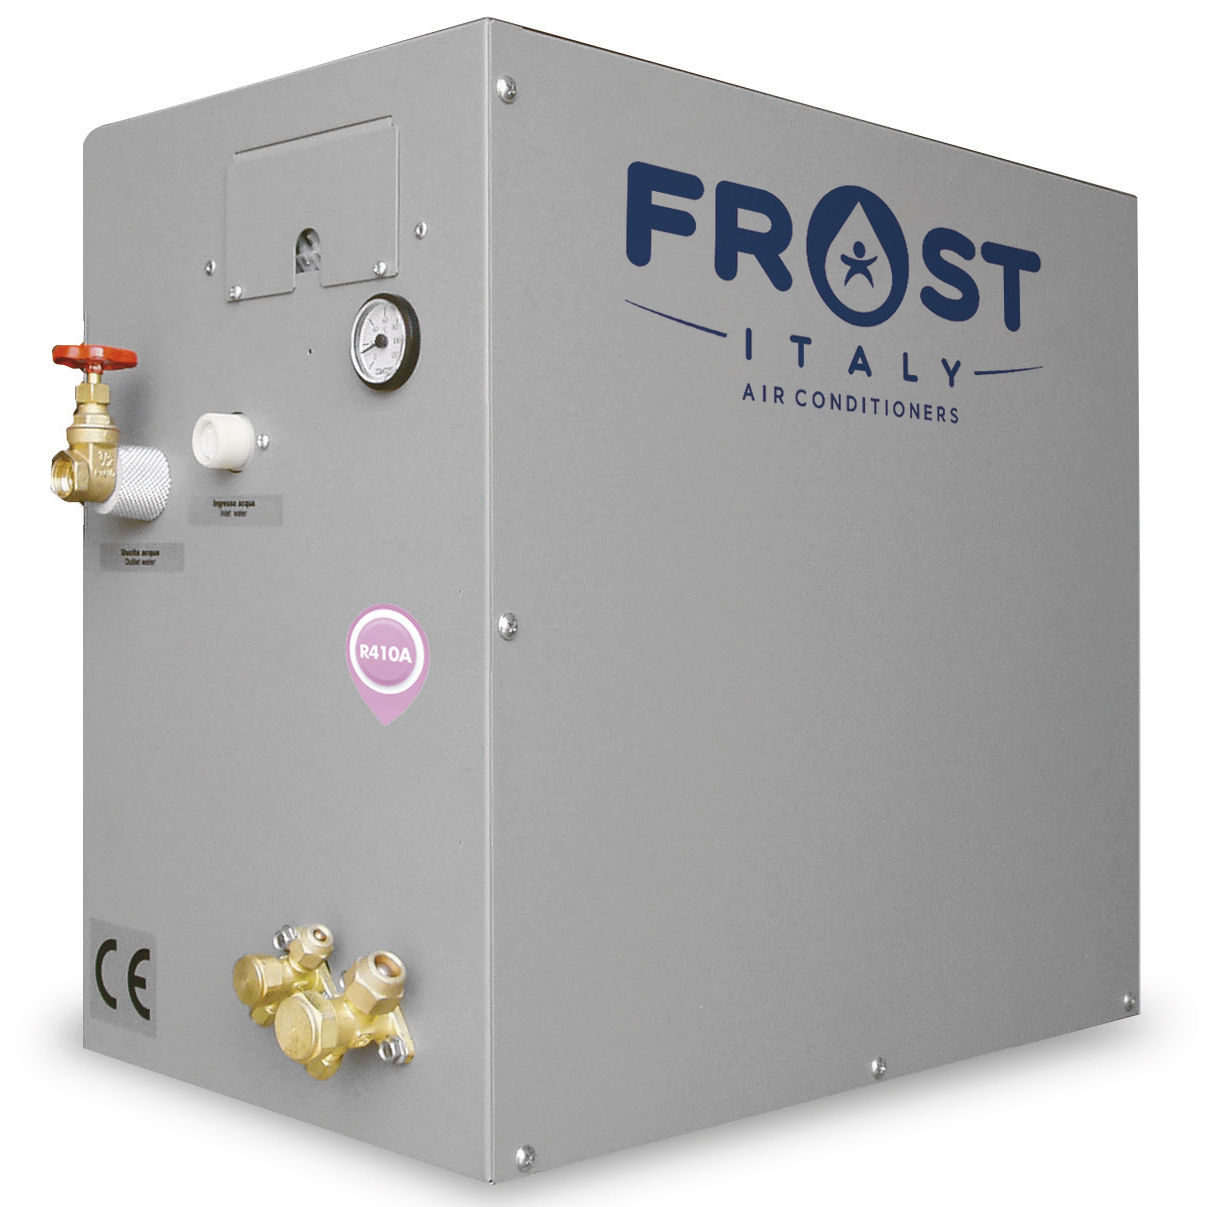 Direct expansion water cooled heat pump unit